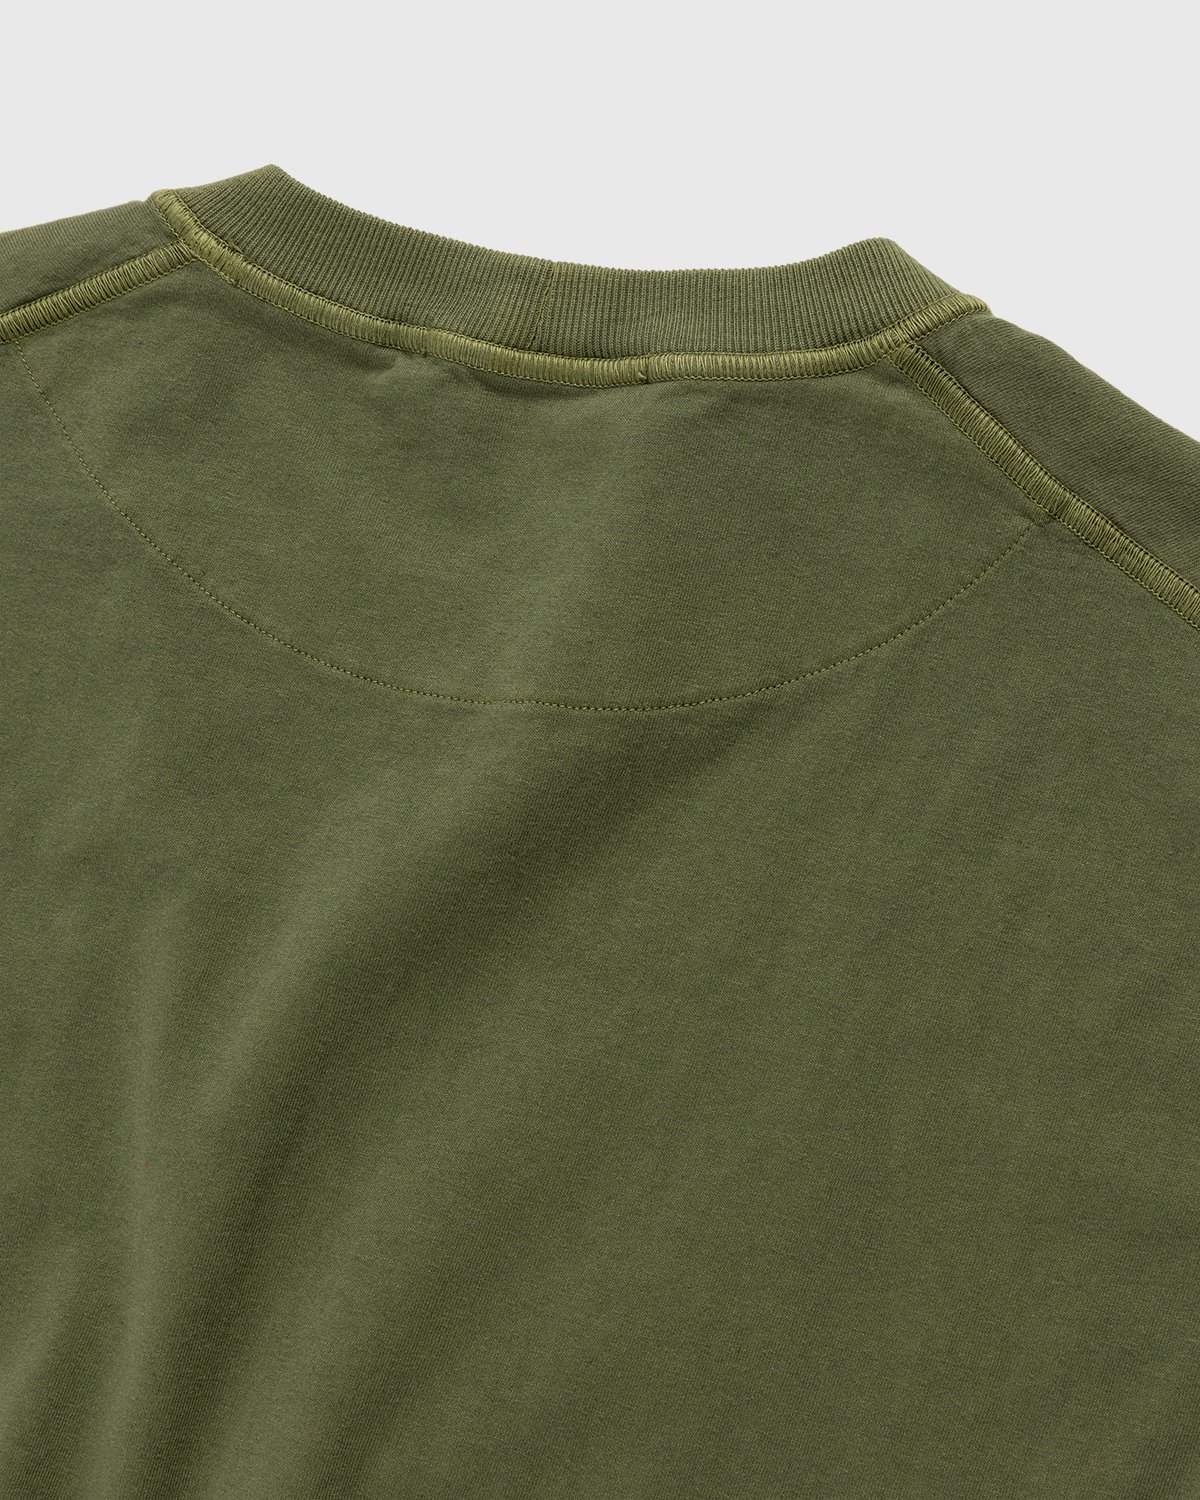 Stone Island - 23757 Garment-Dyed Fissato T-Shirt Olive Green - Clothing - Green - Image 6